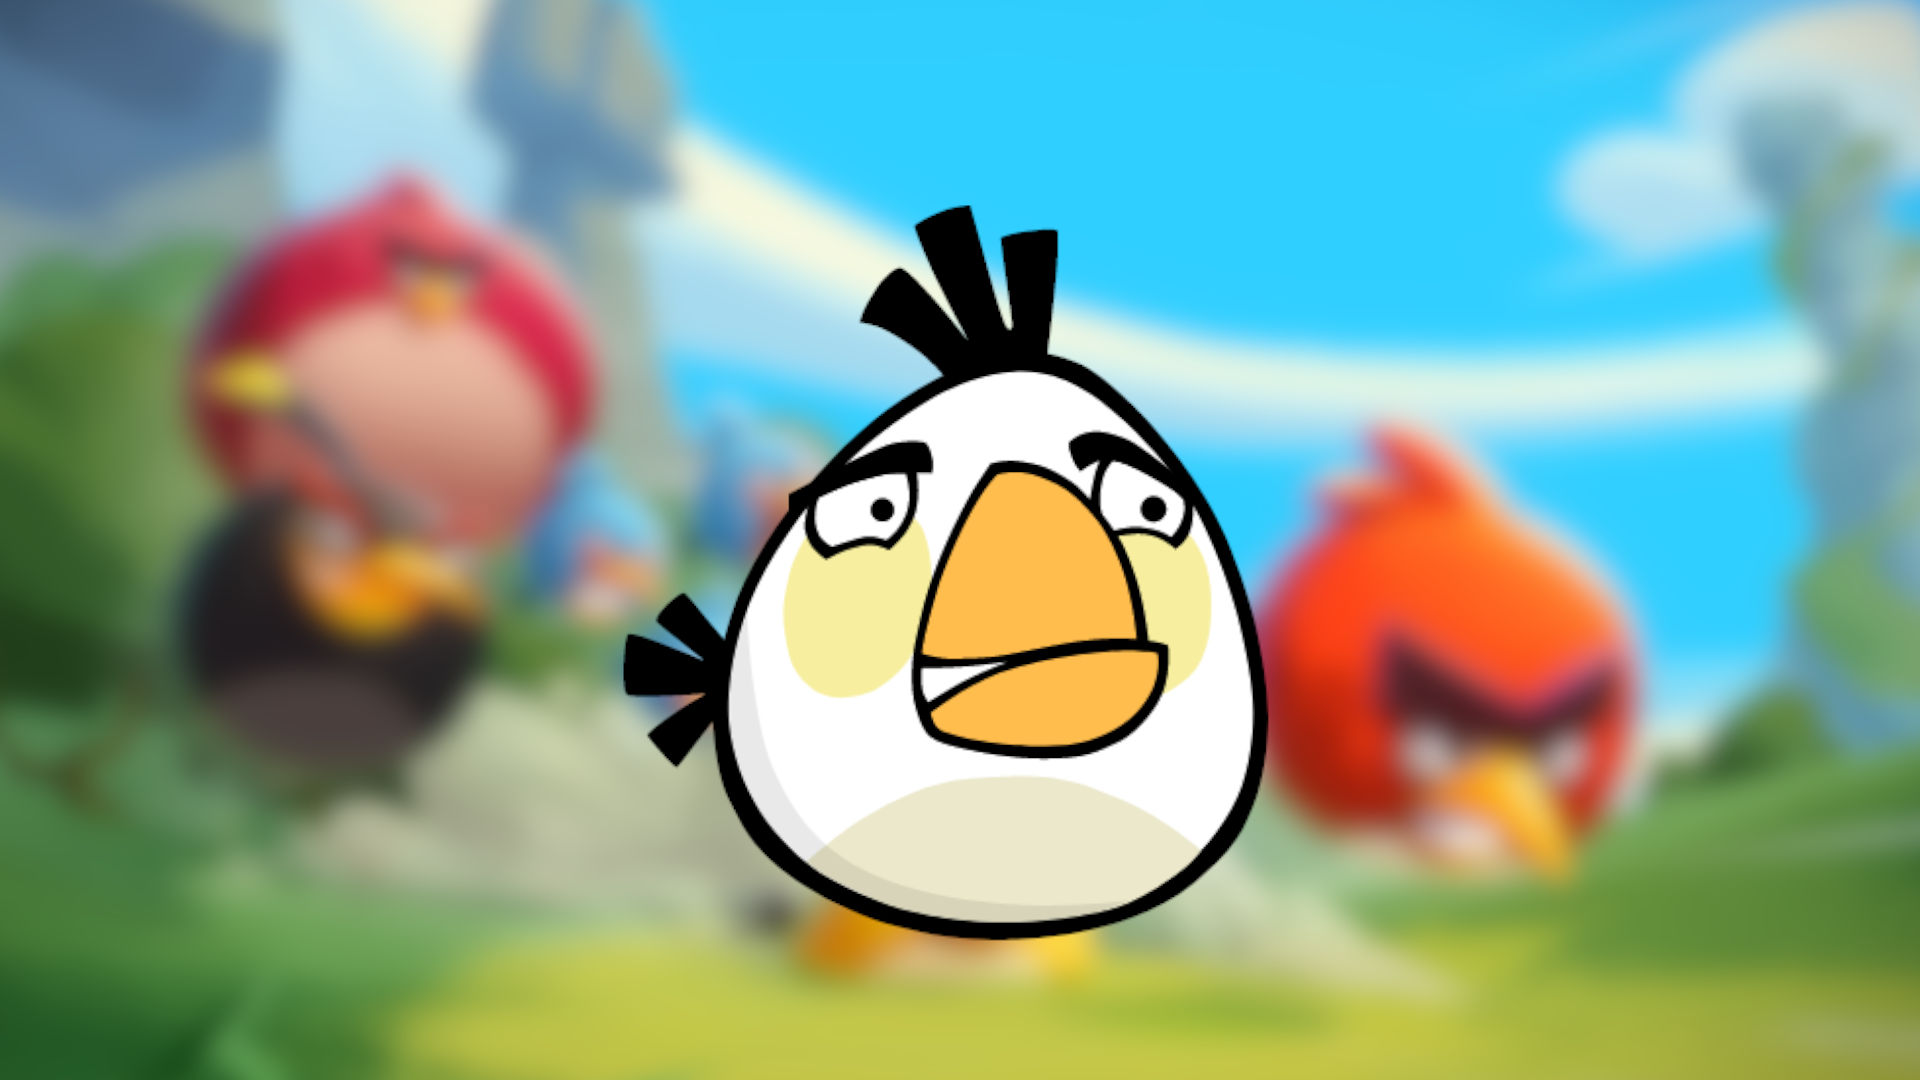 Angry Birds character Matilda